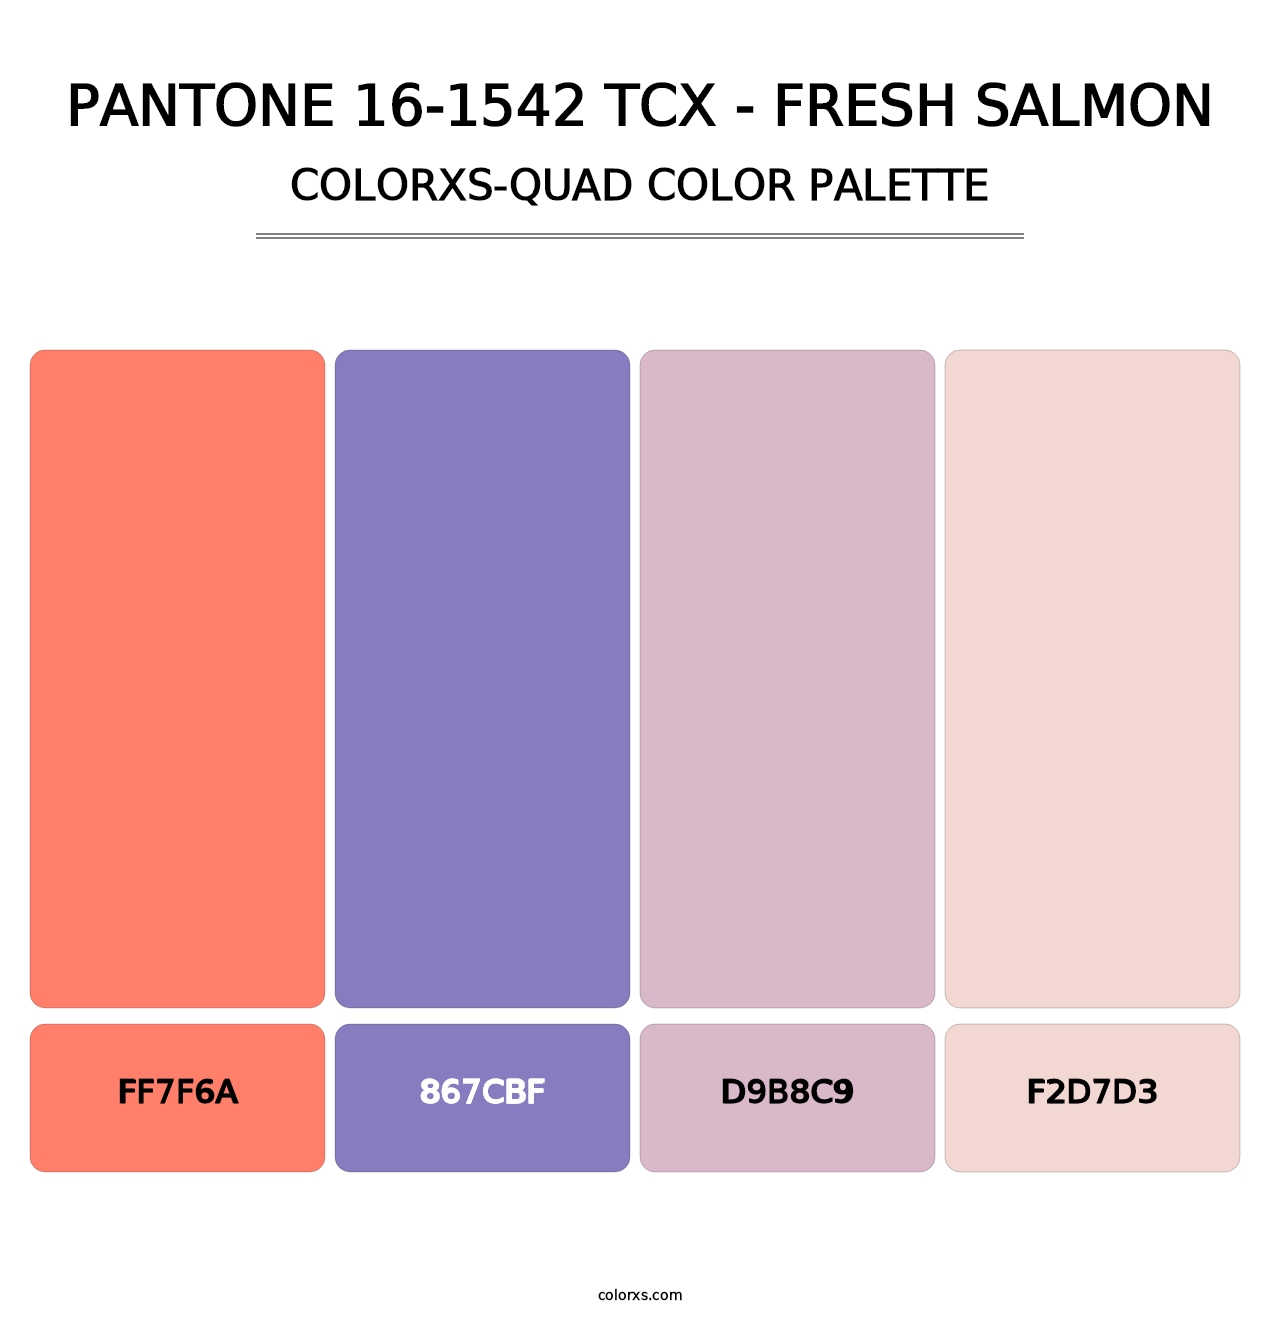 PANTONE 16-1542 TCX - Fresh Salmon - Colorxs Quad Palette